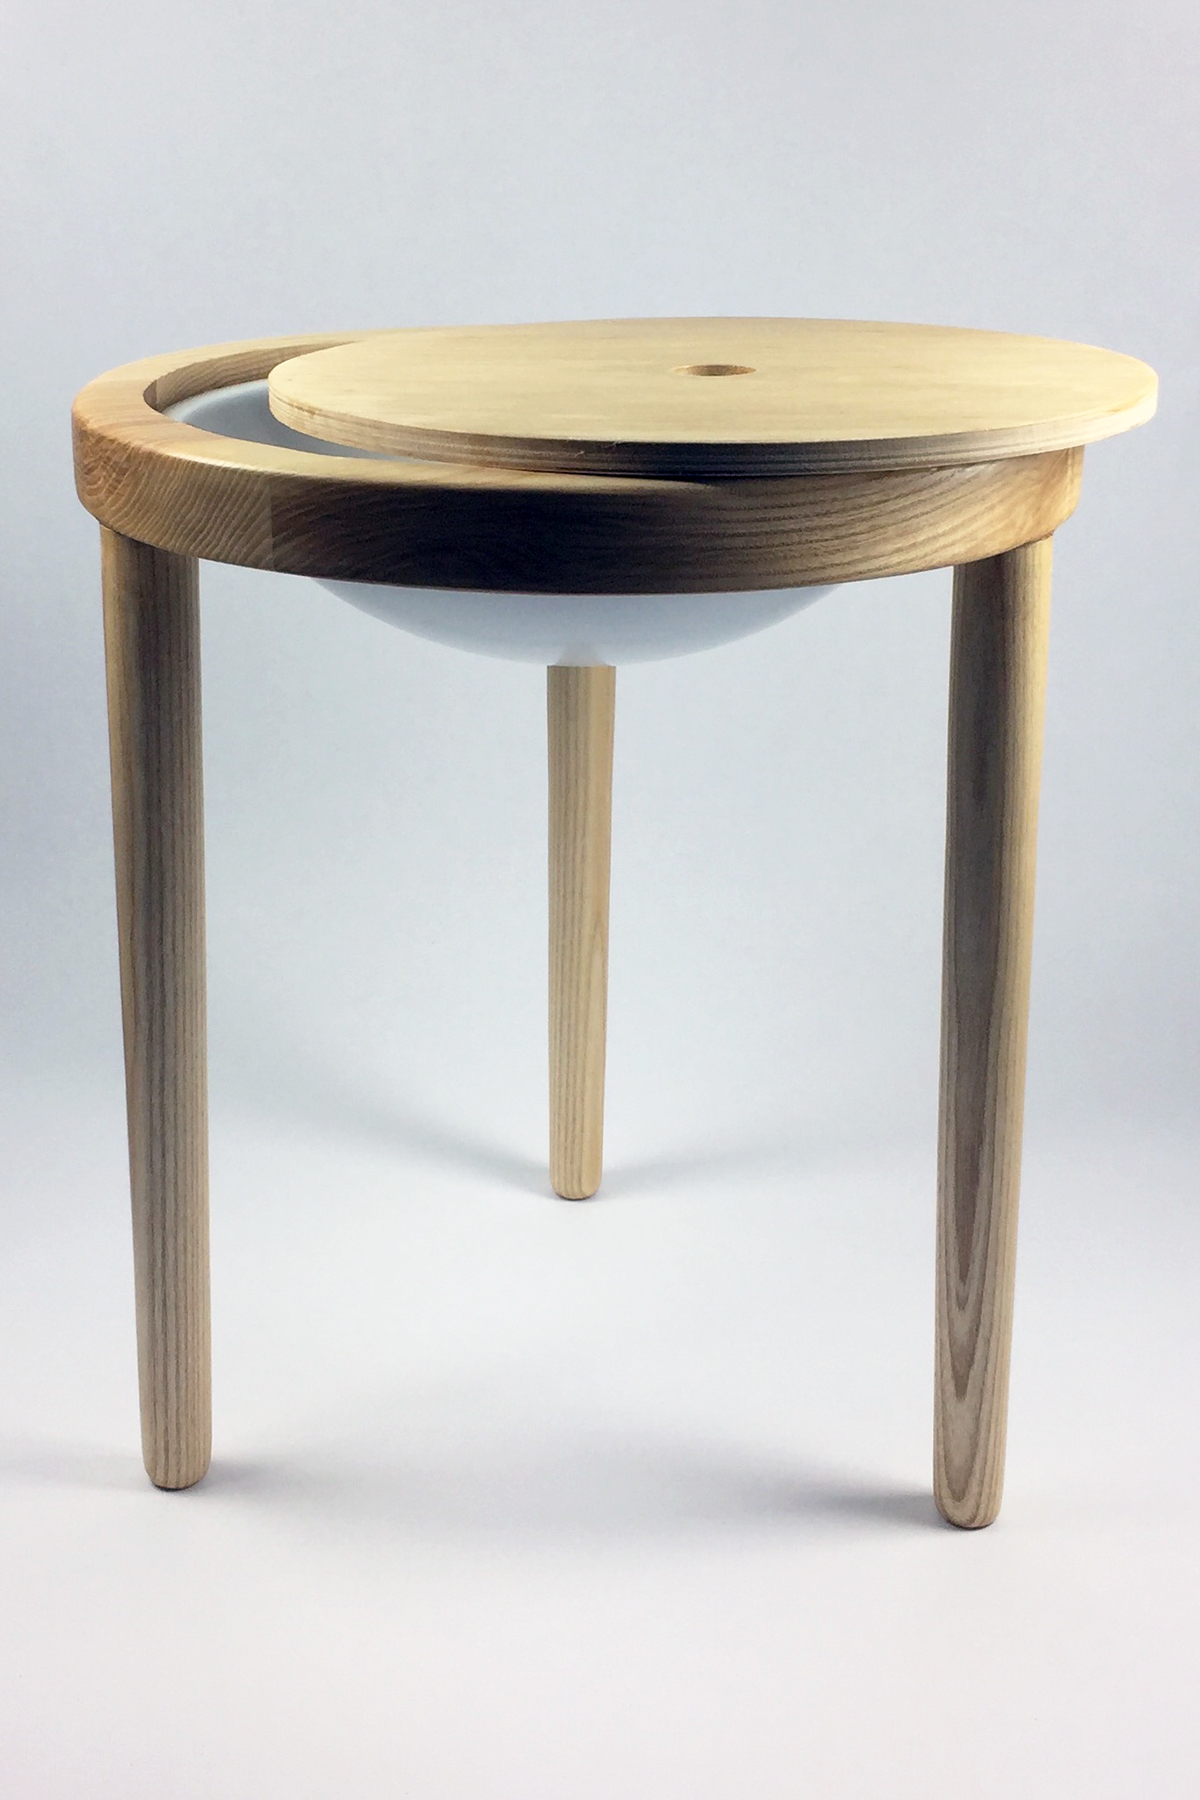 furniture table risd industrial design  product vacuum forming